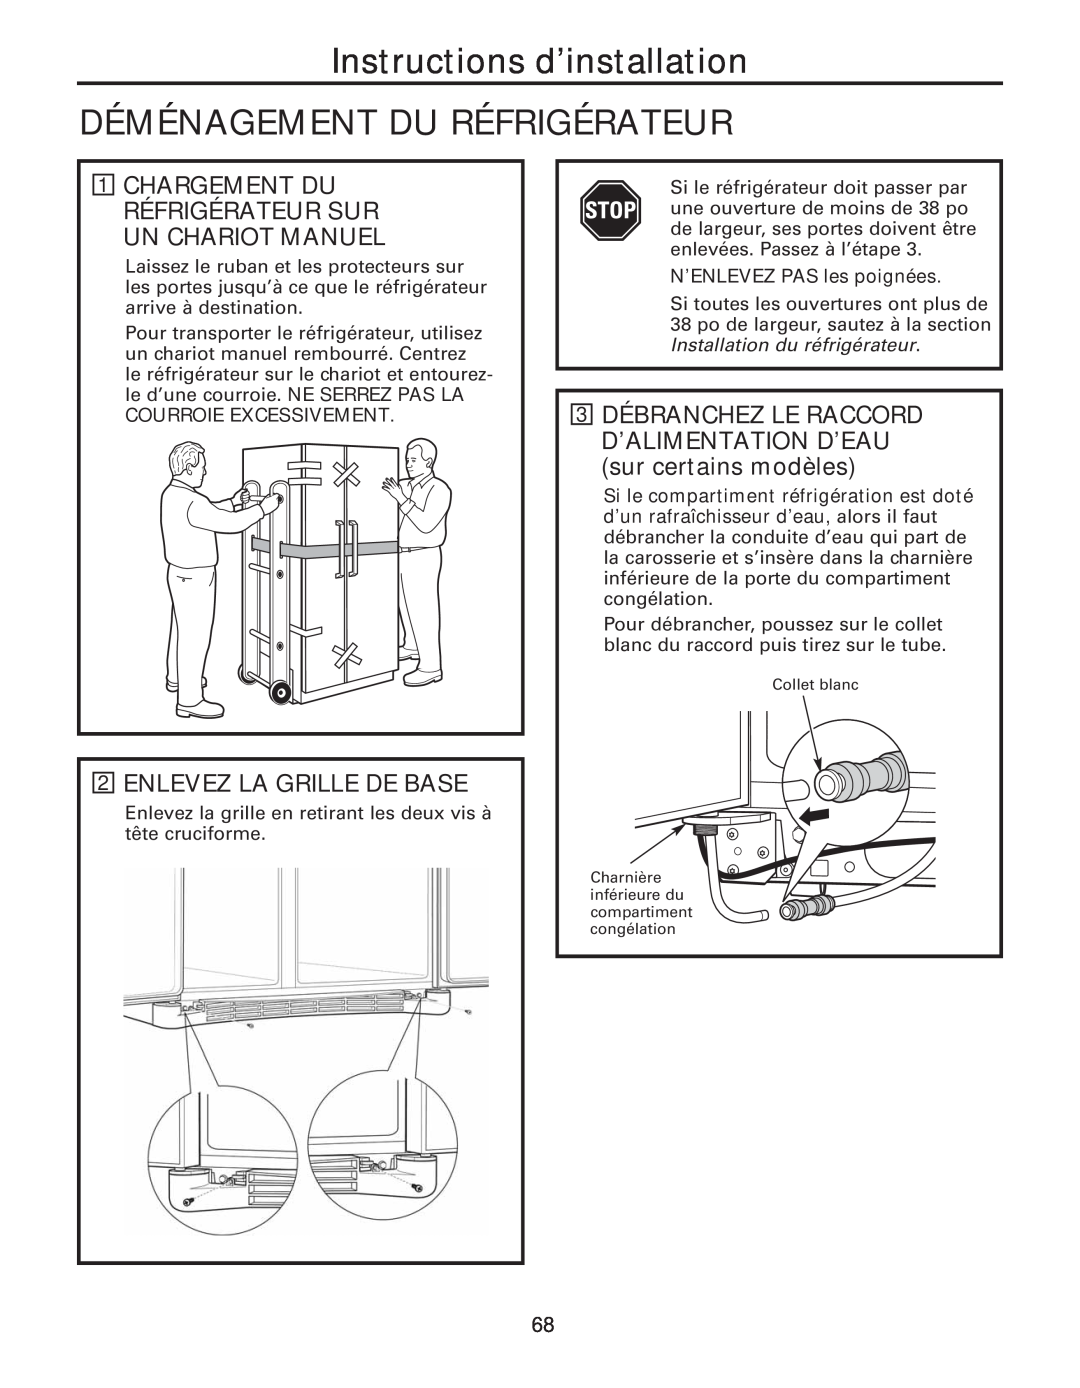 GE 49-60637 Instructions d’installation DÉMÉNAGEMENT DU RÉFRIGÉRATEUR, Chargement Du Réfrigérateur Sur Un Chariot Manuel 